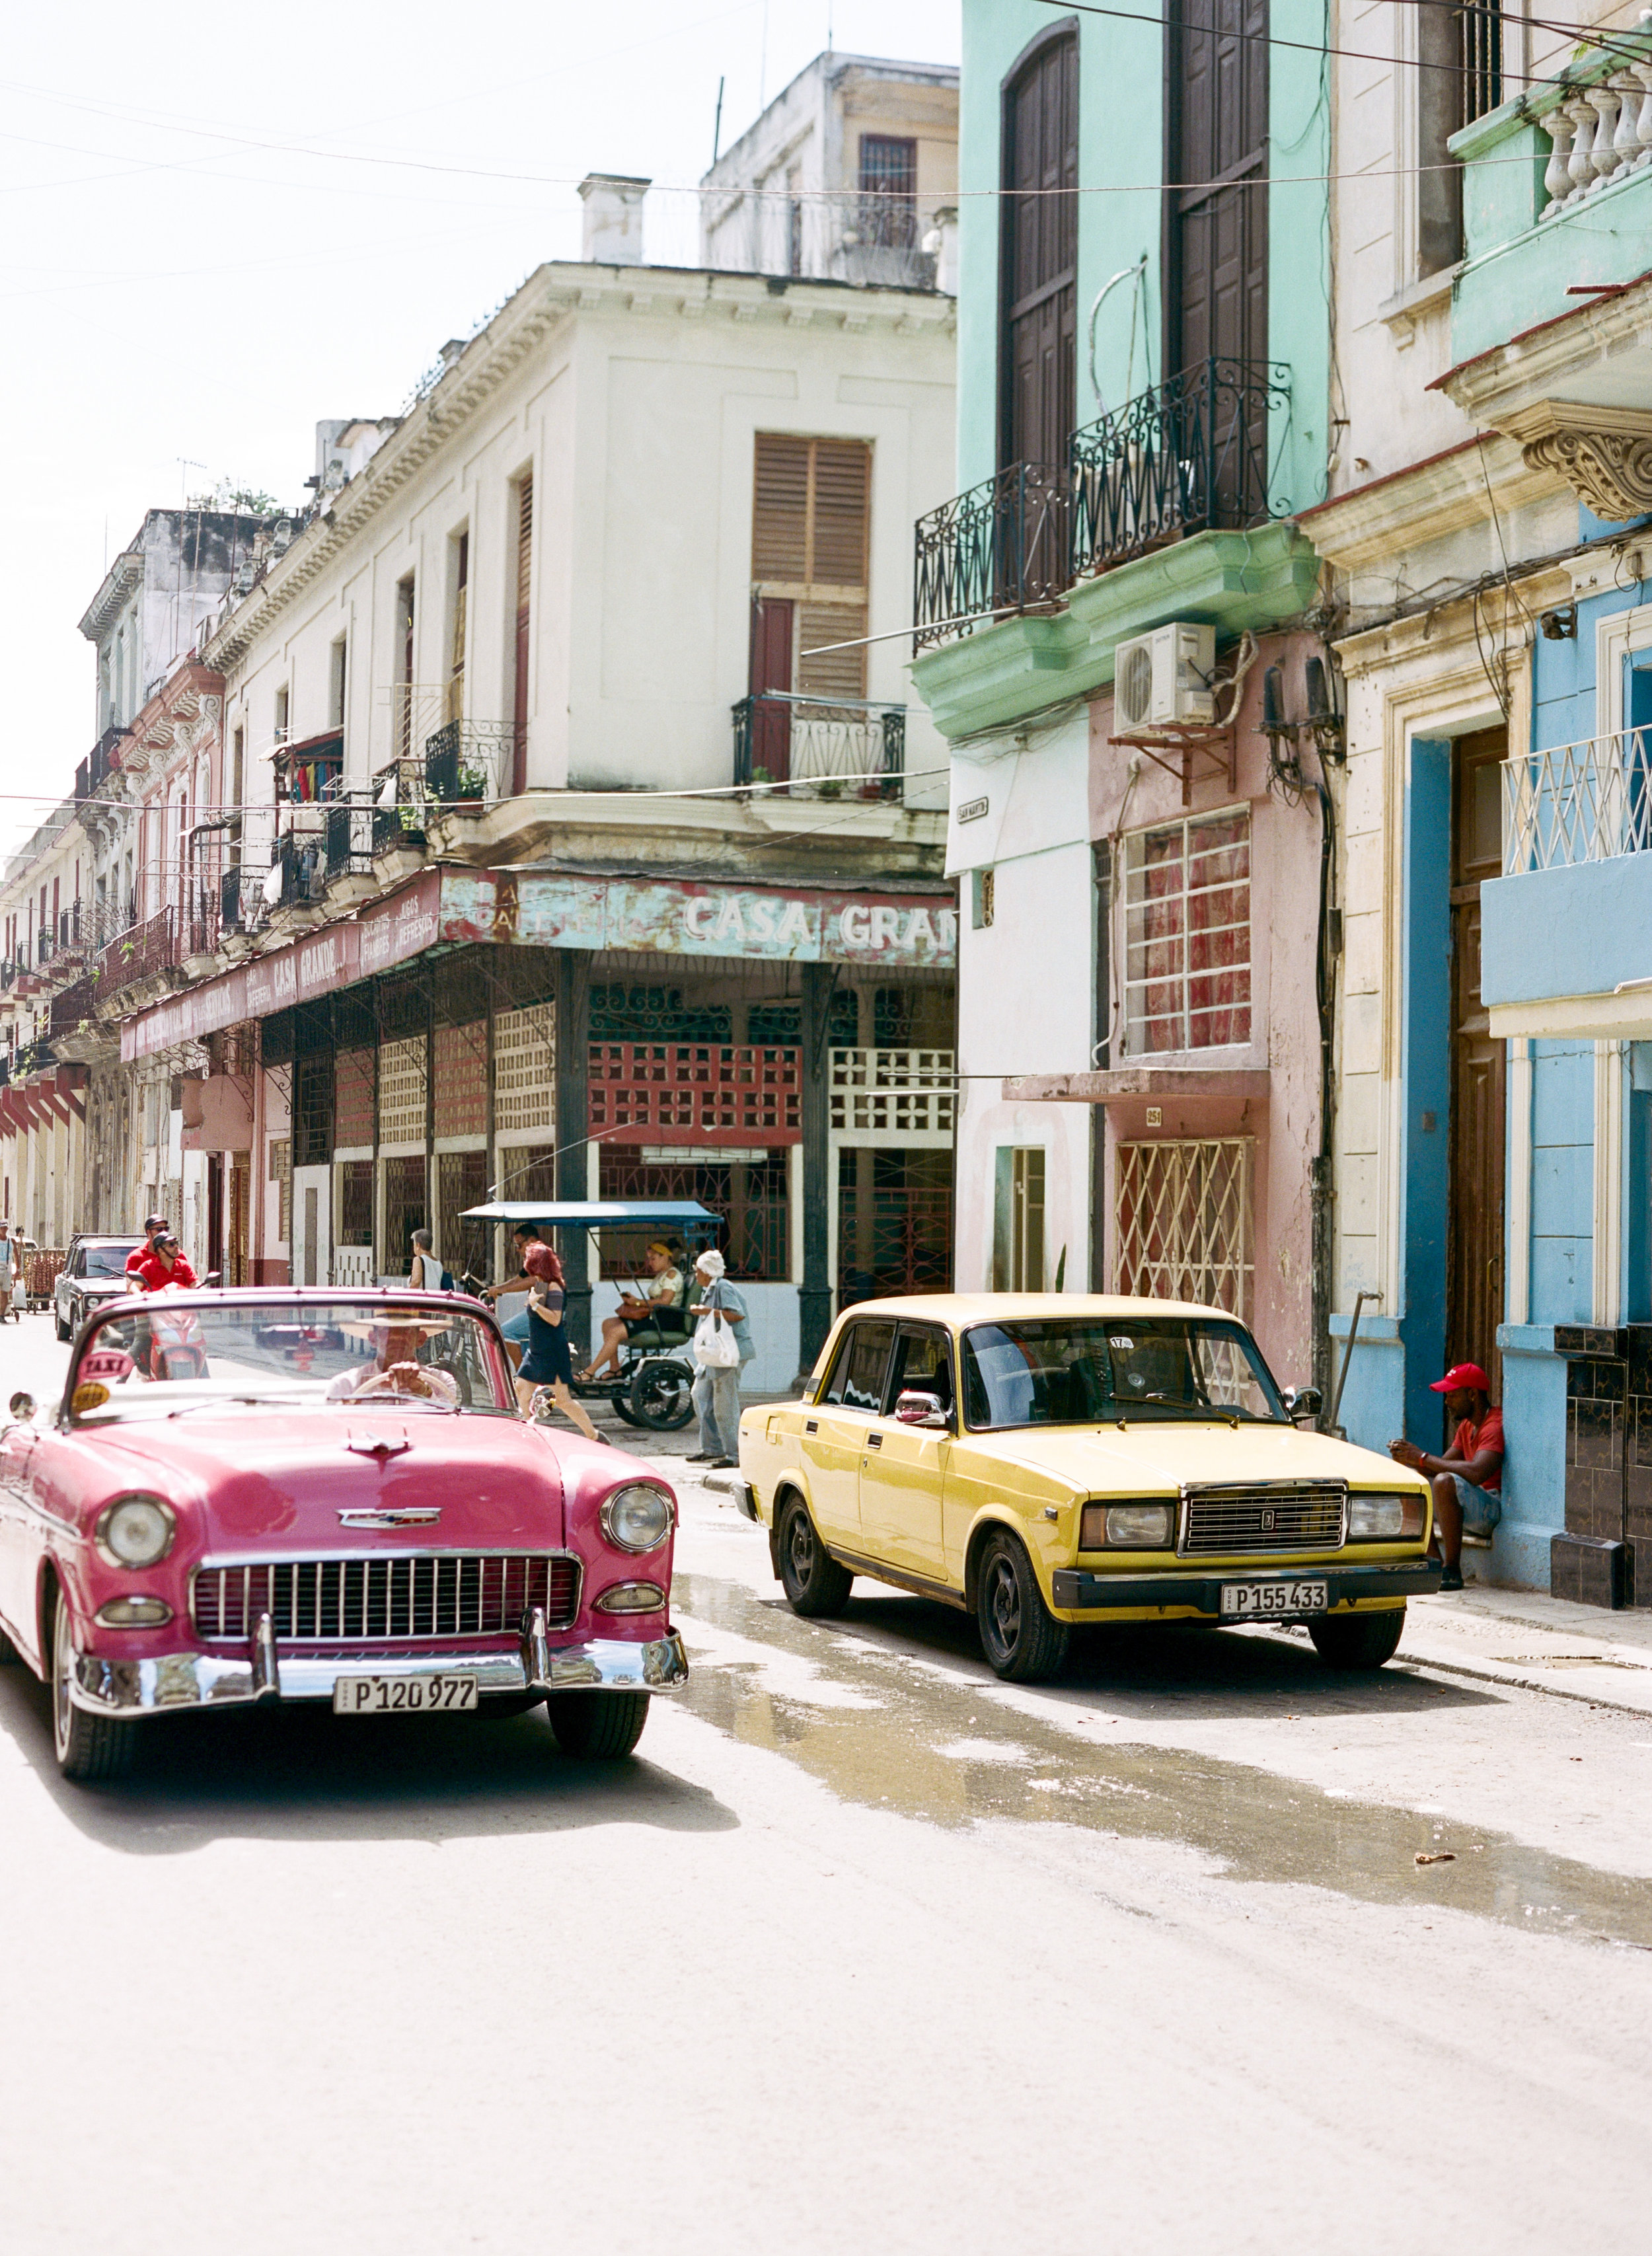 Cuba-Travel-photography-rachael-mcitnosh-photography-7.jpg